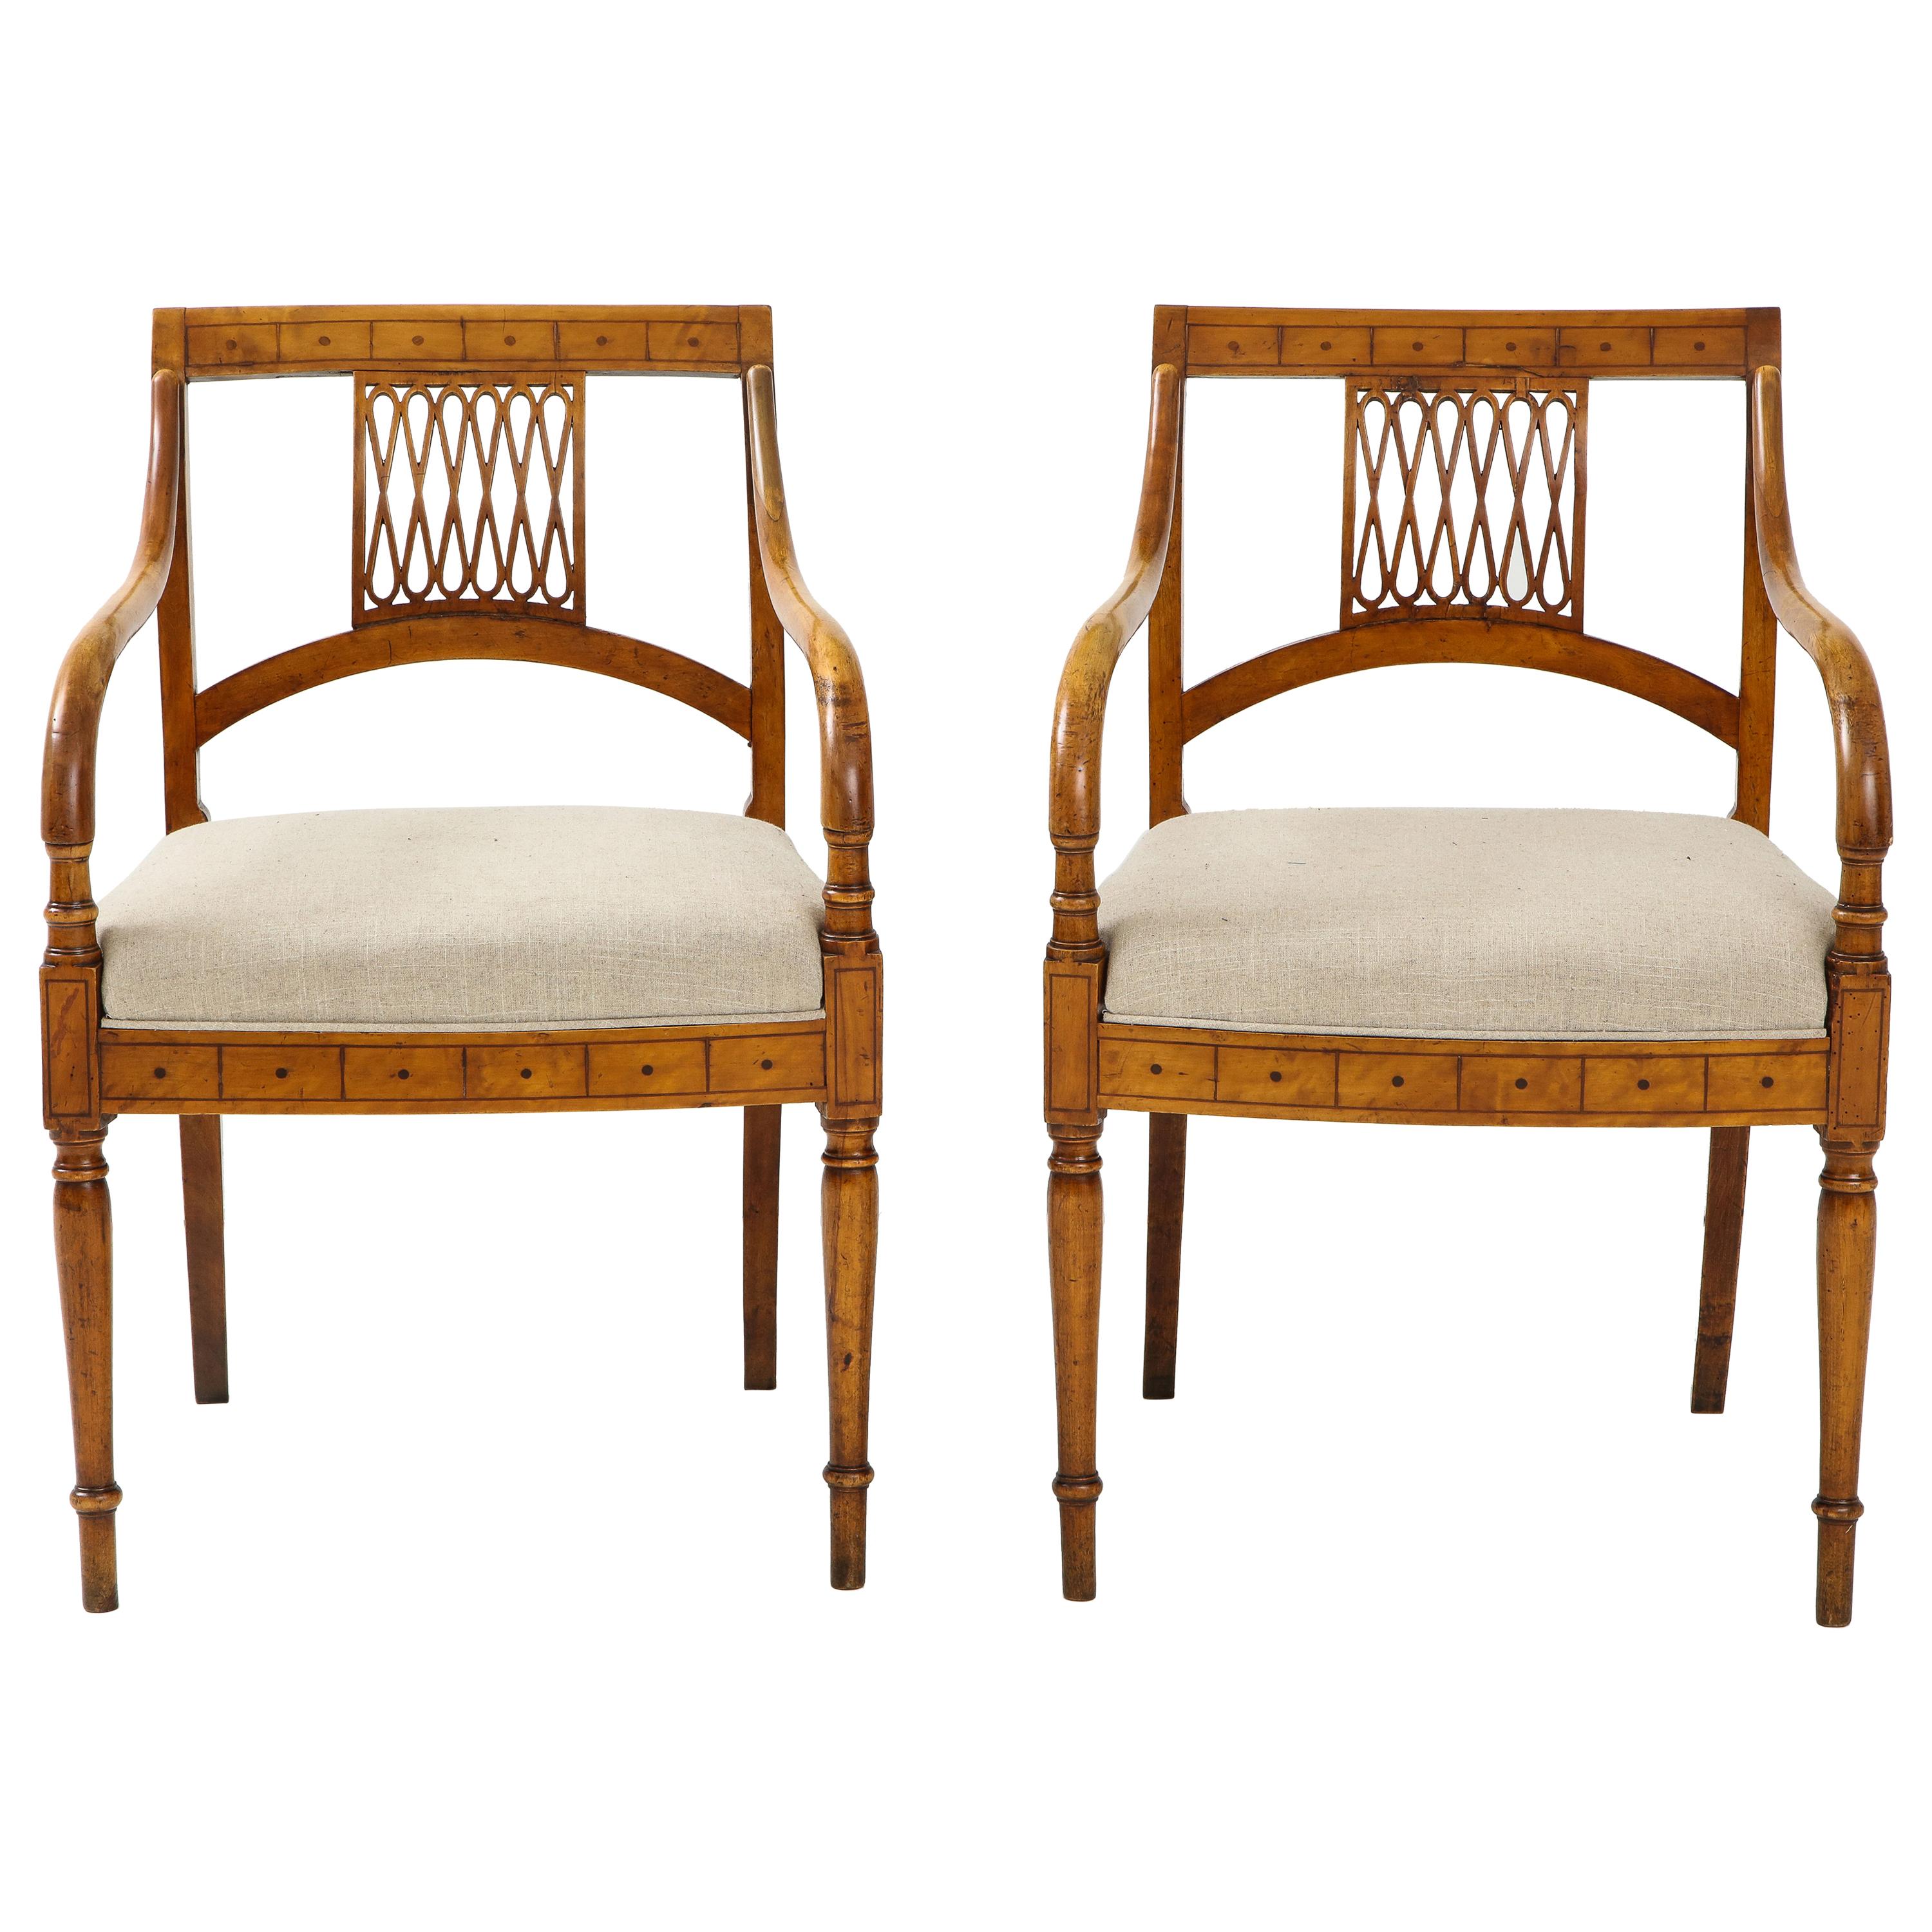 Pair of Italian Inlaid Armchairs